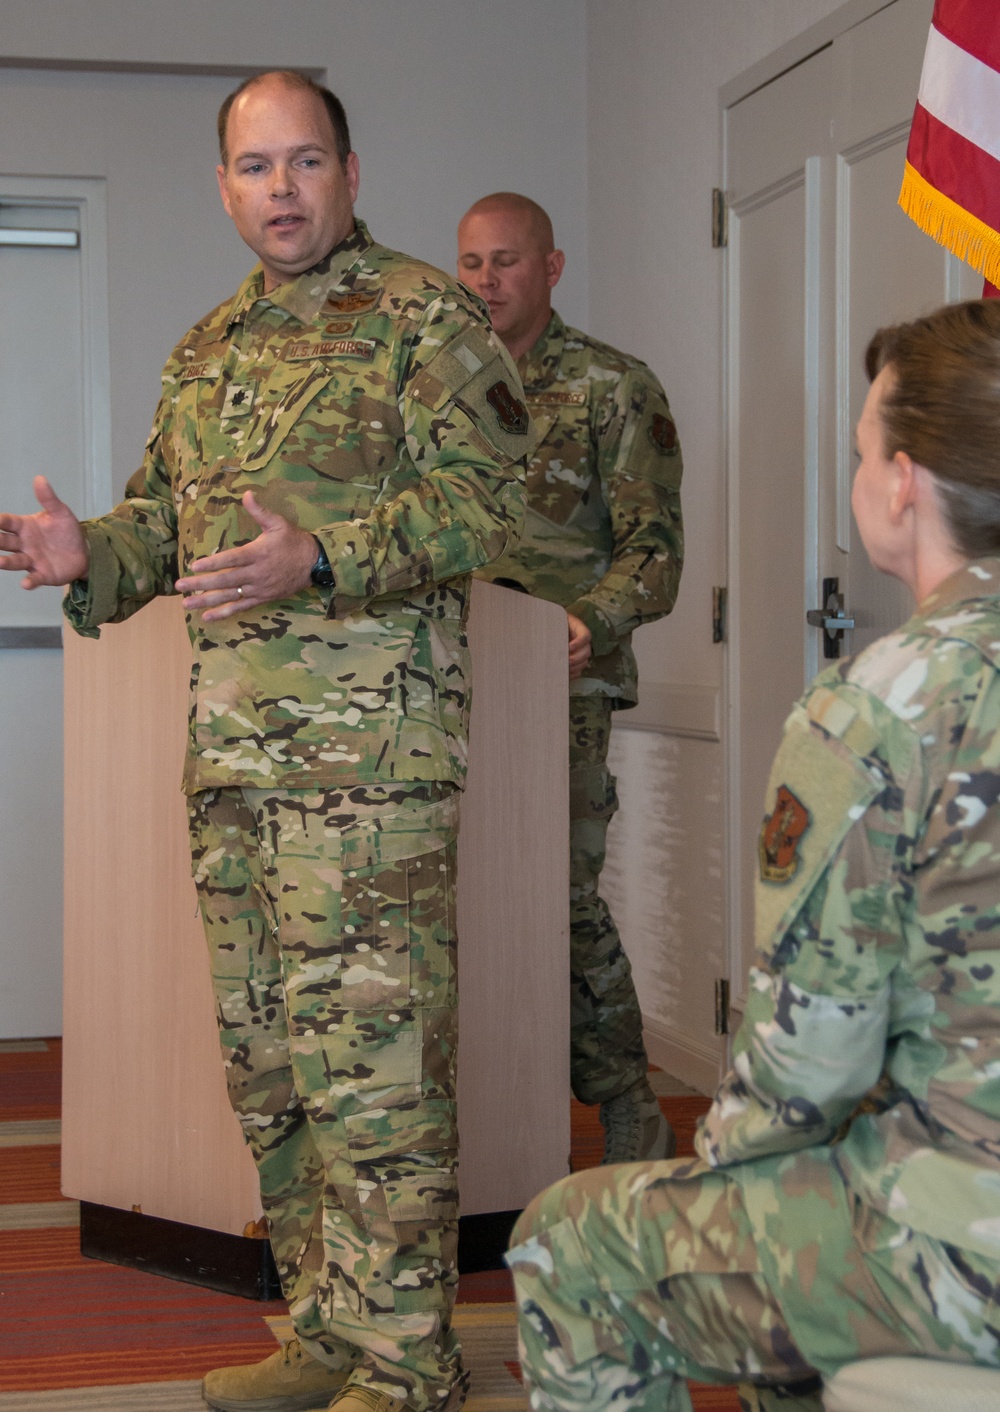 Maj. Chrystal promotes to Lt. Col.